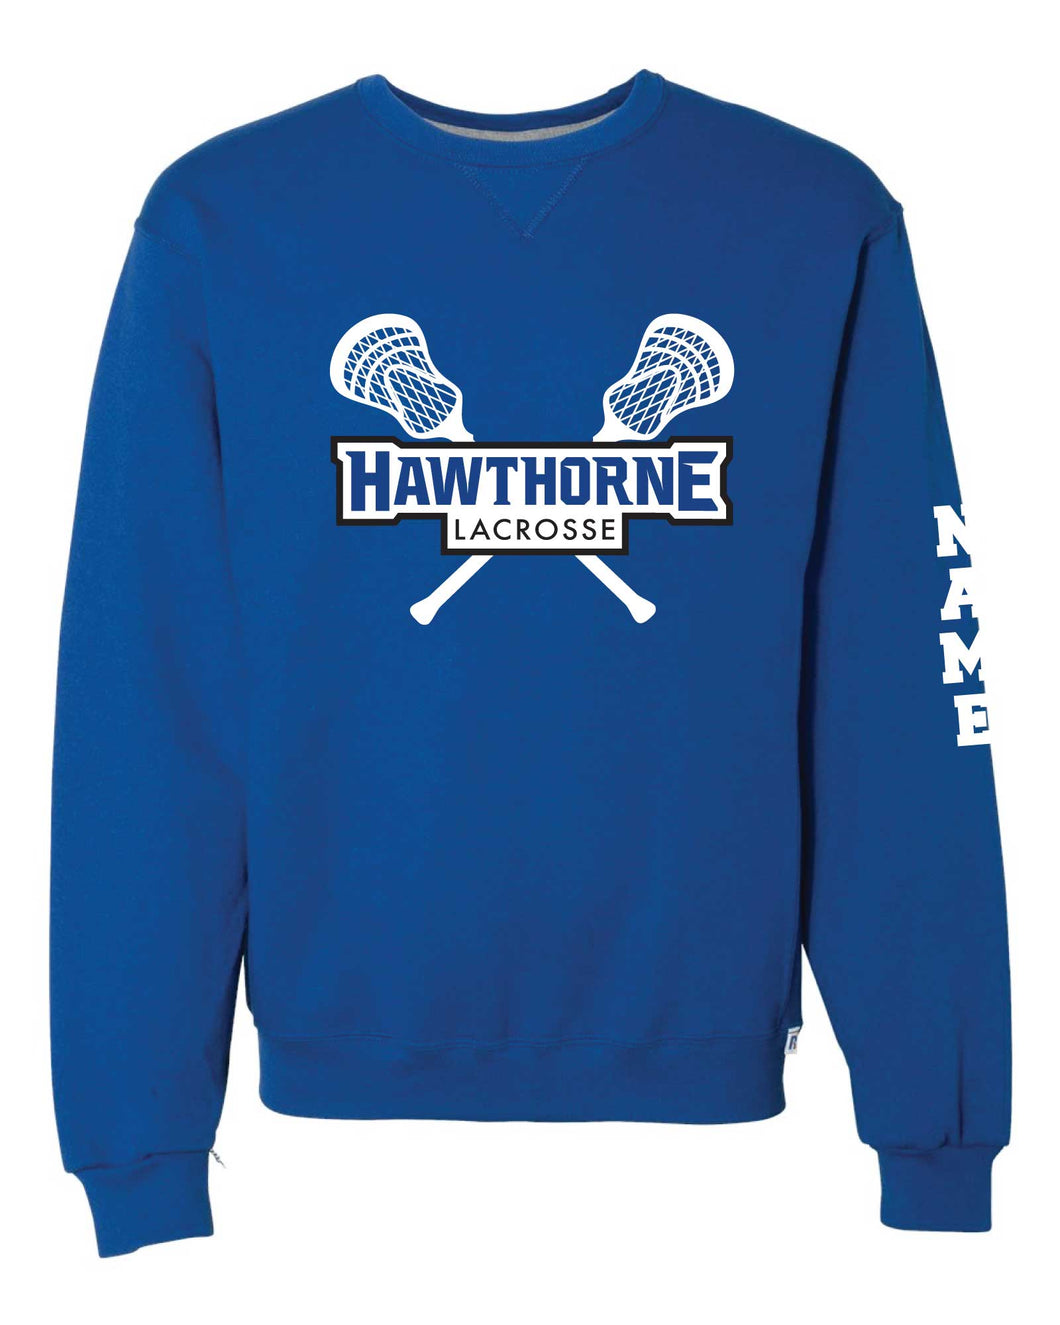 Hawthorne Lacrosse Russell Athletic Cotton Crewneck Sweatshirt - Royal